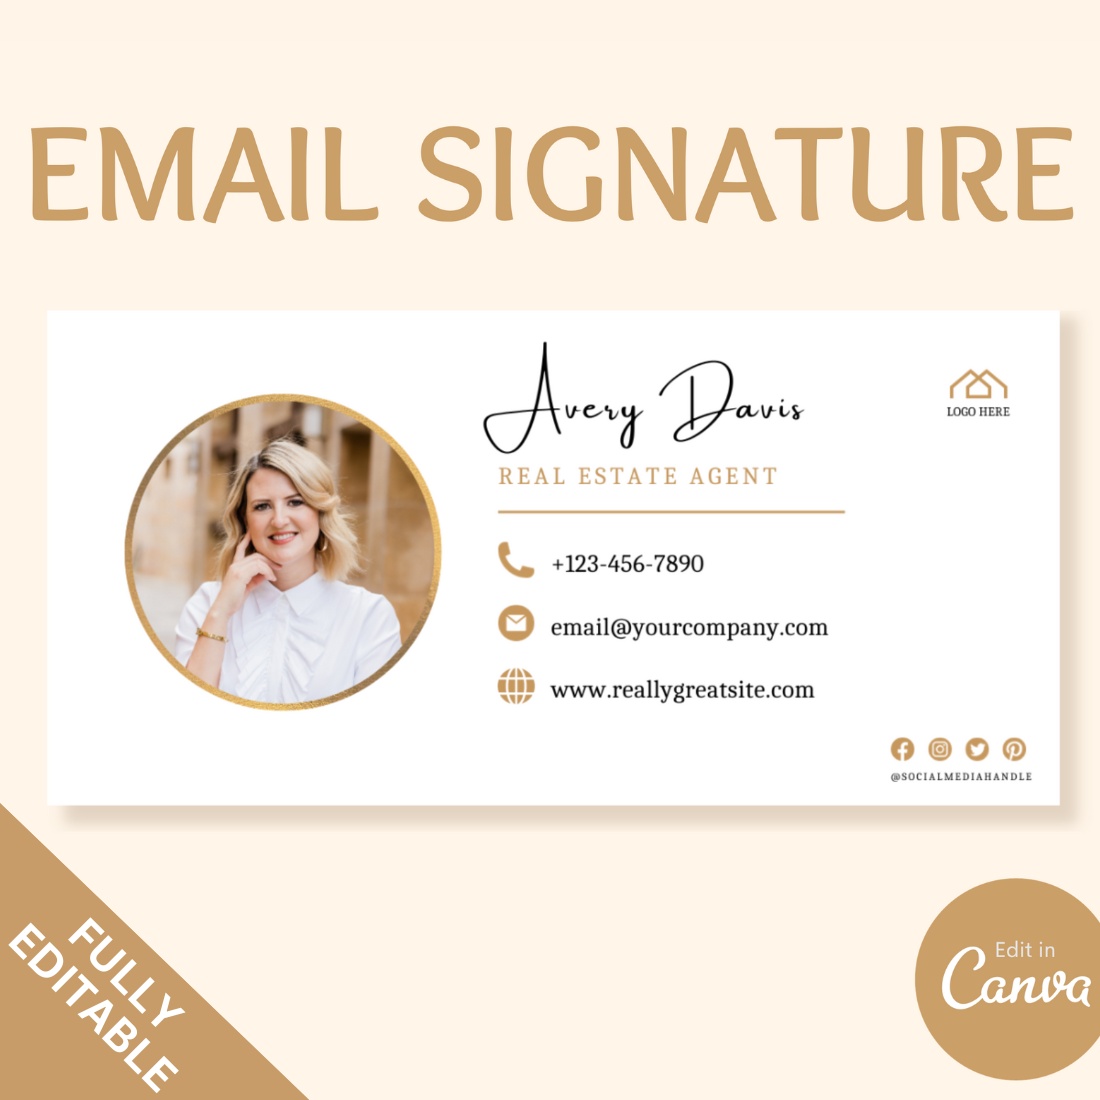 Email Signature Template with logo & photo! Editable Canva Signature Design Minimalist, Realtor Marketing, Real Estate, Professional, Gmail cover image.